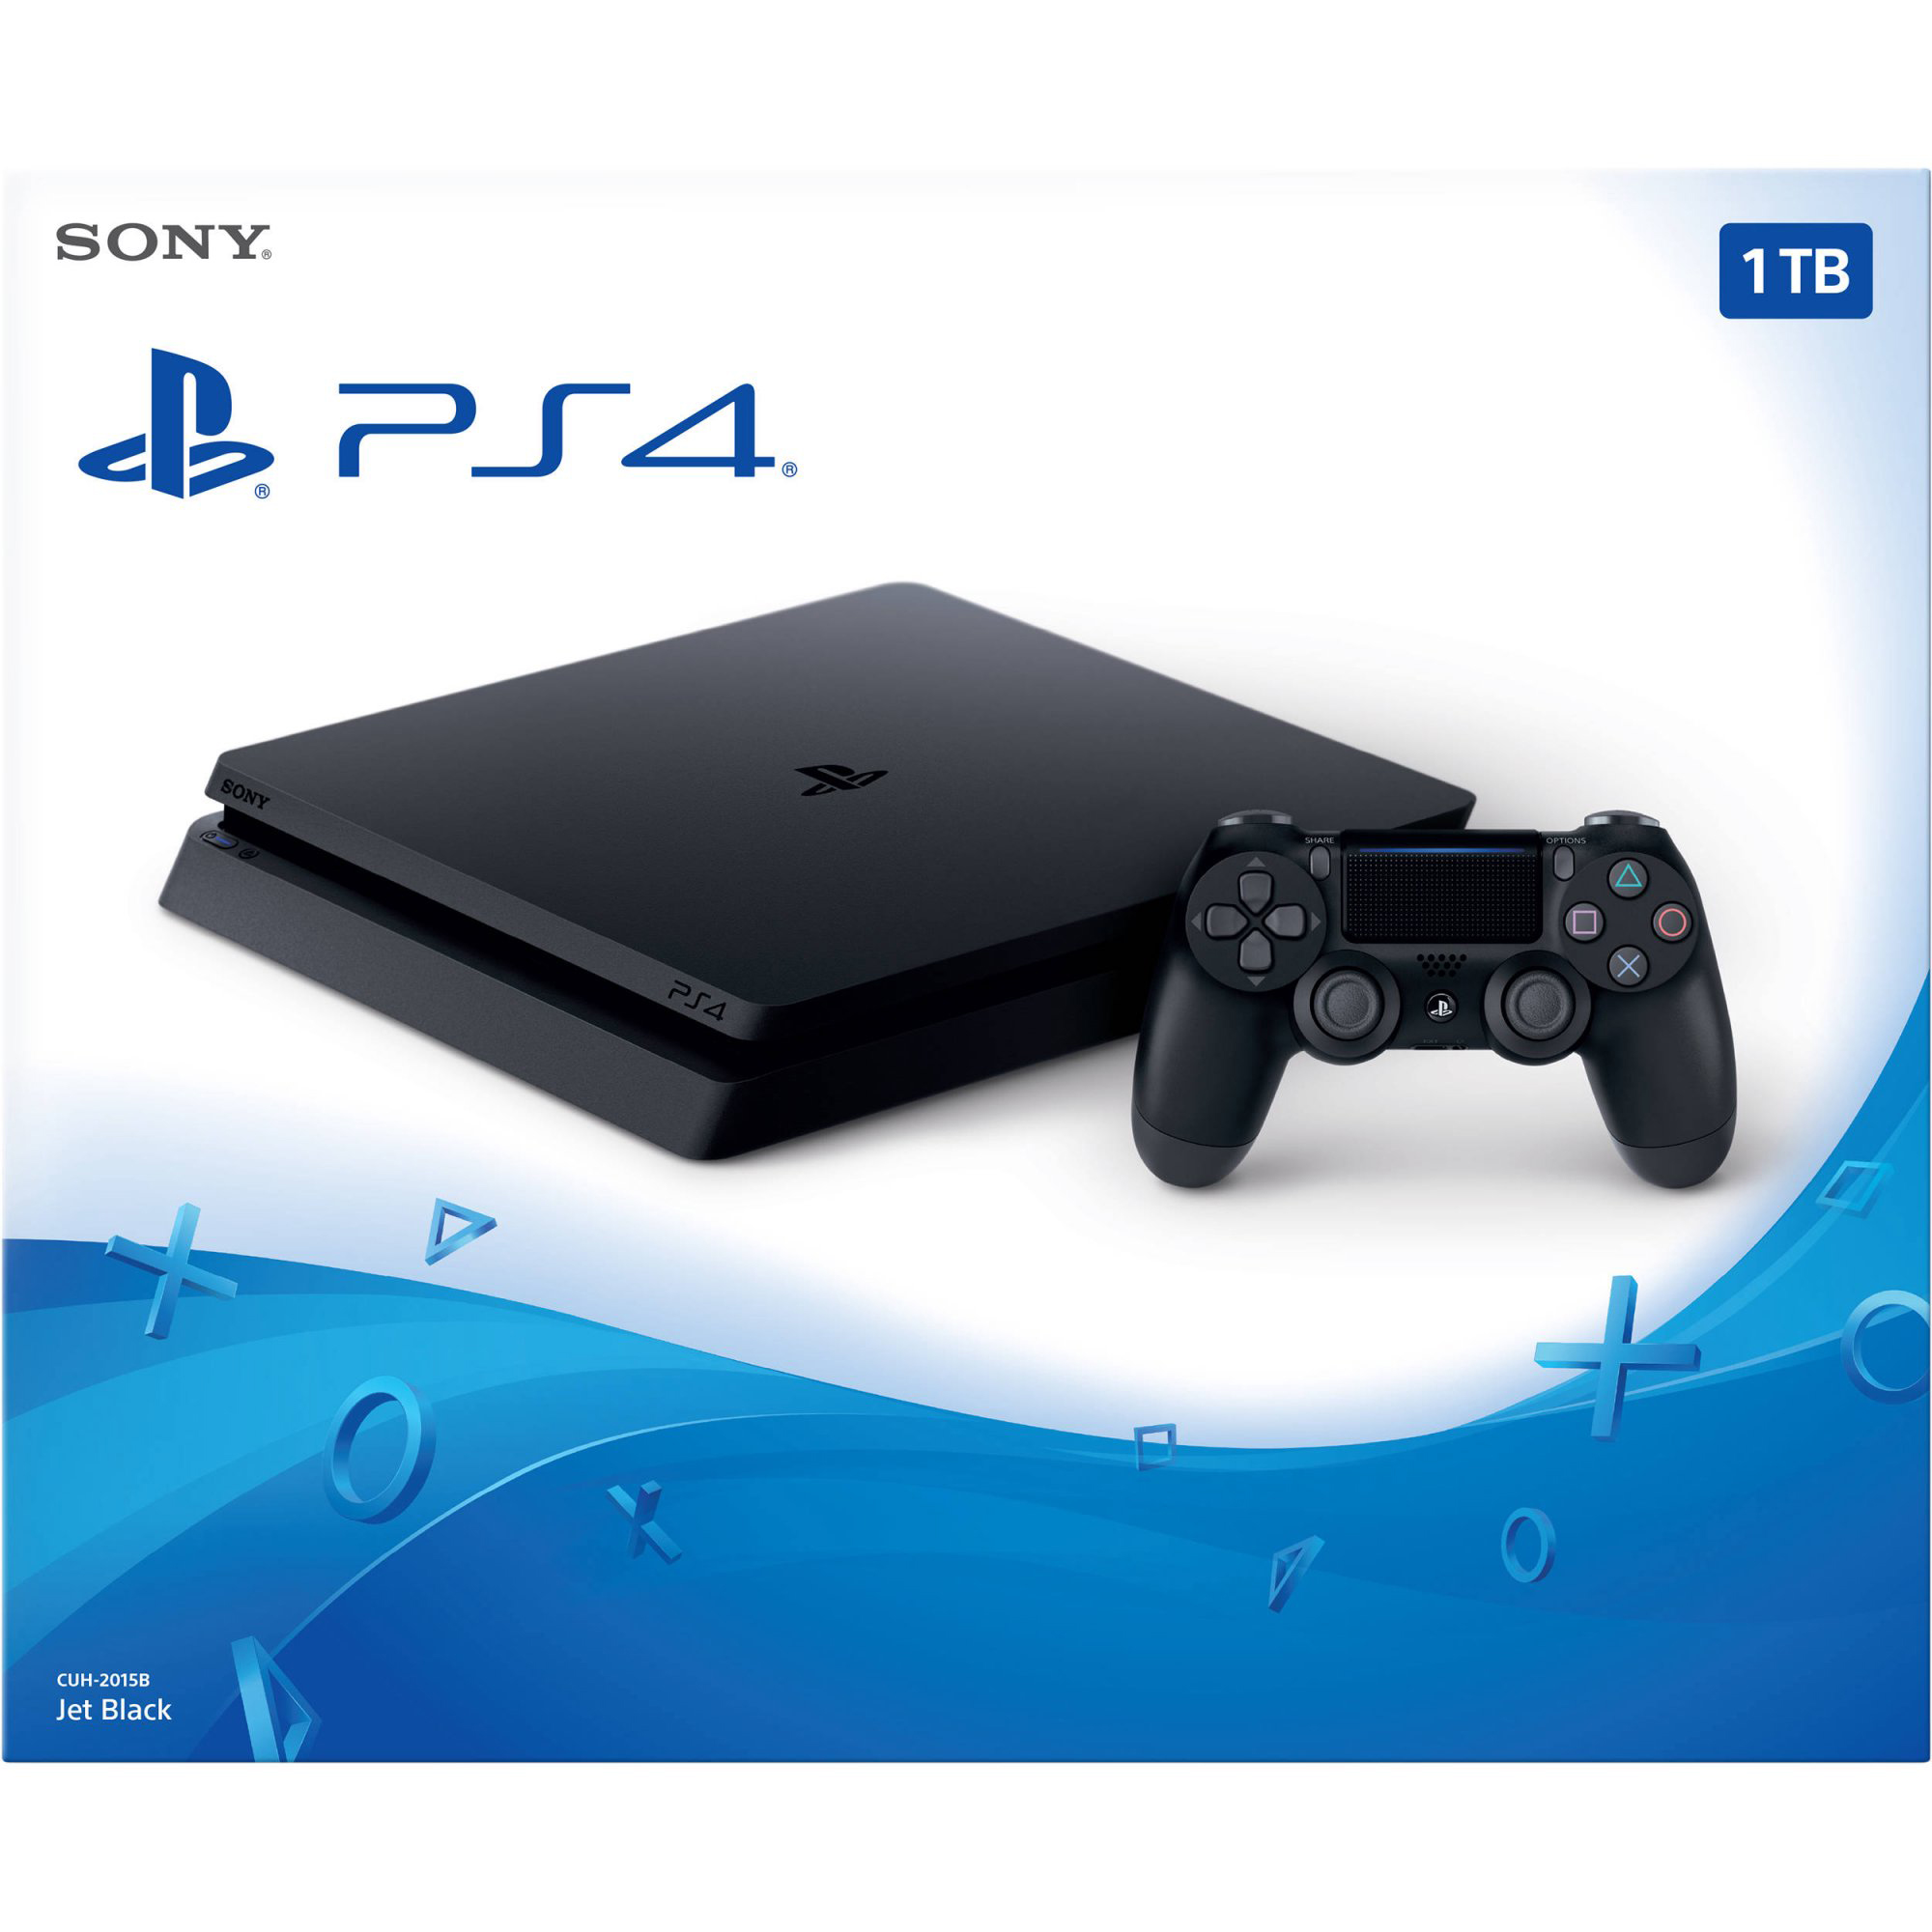 Sony PlayStation 4 Slim 1TB Gaming Console, Black, CUH-2115B - image 2 of 9